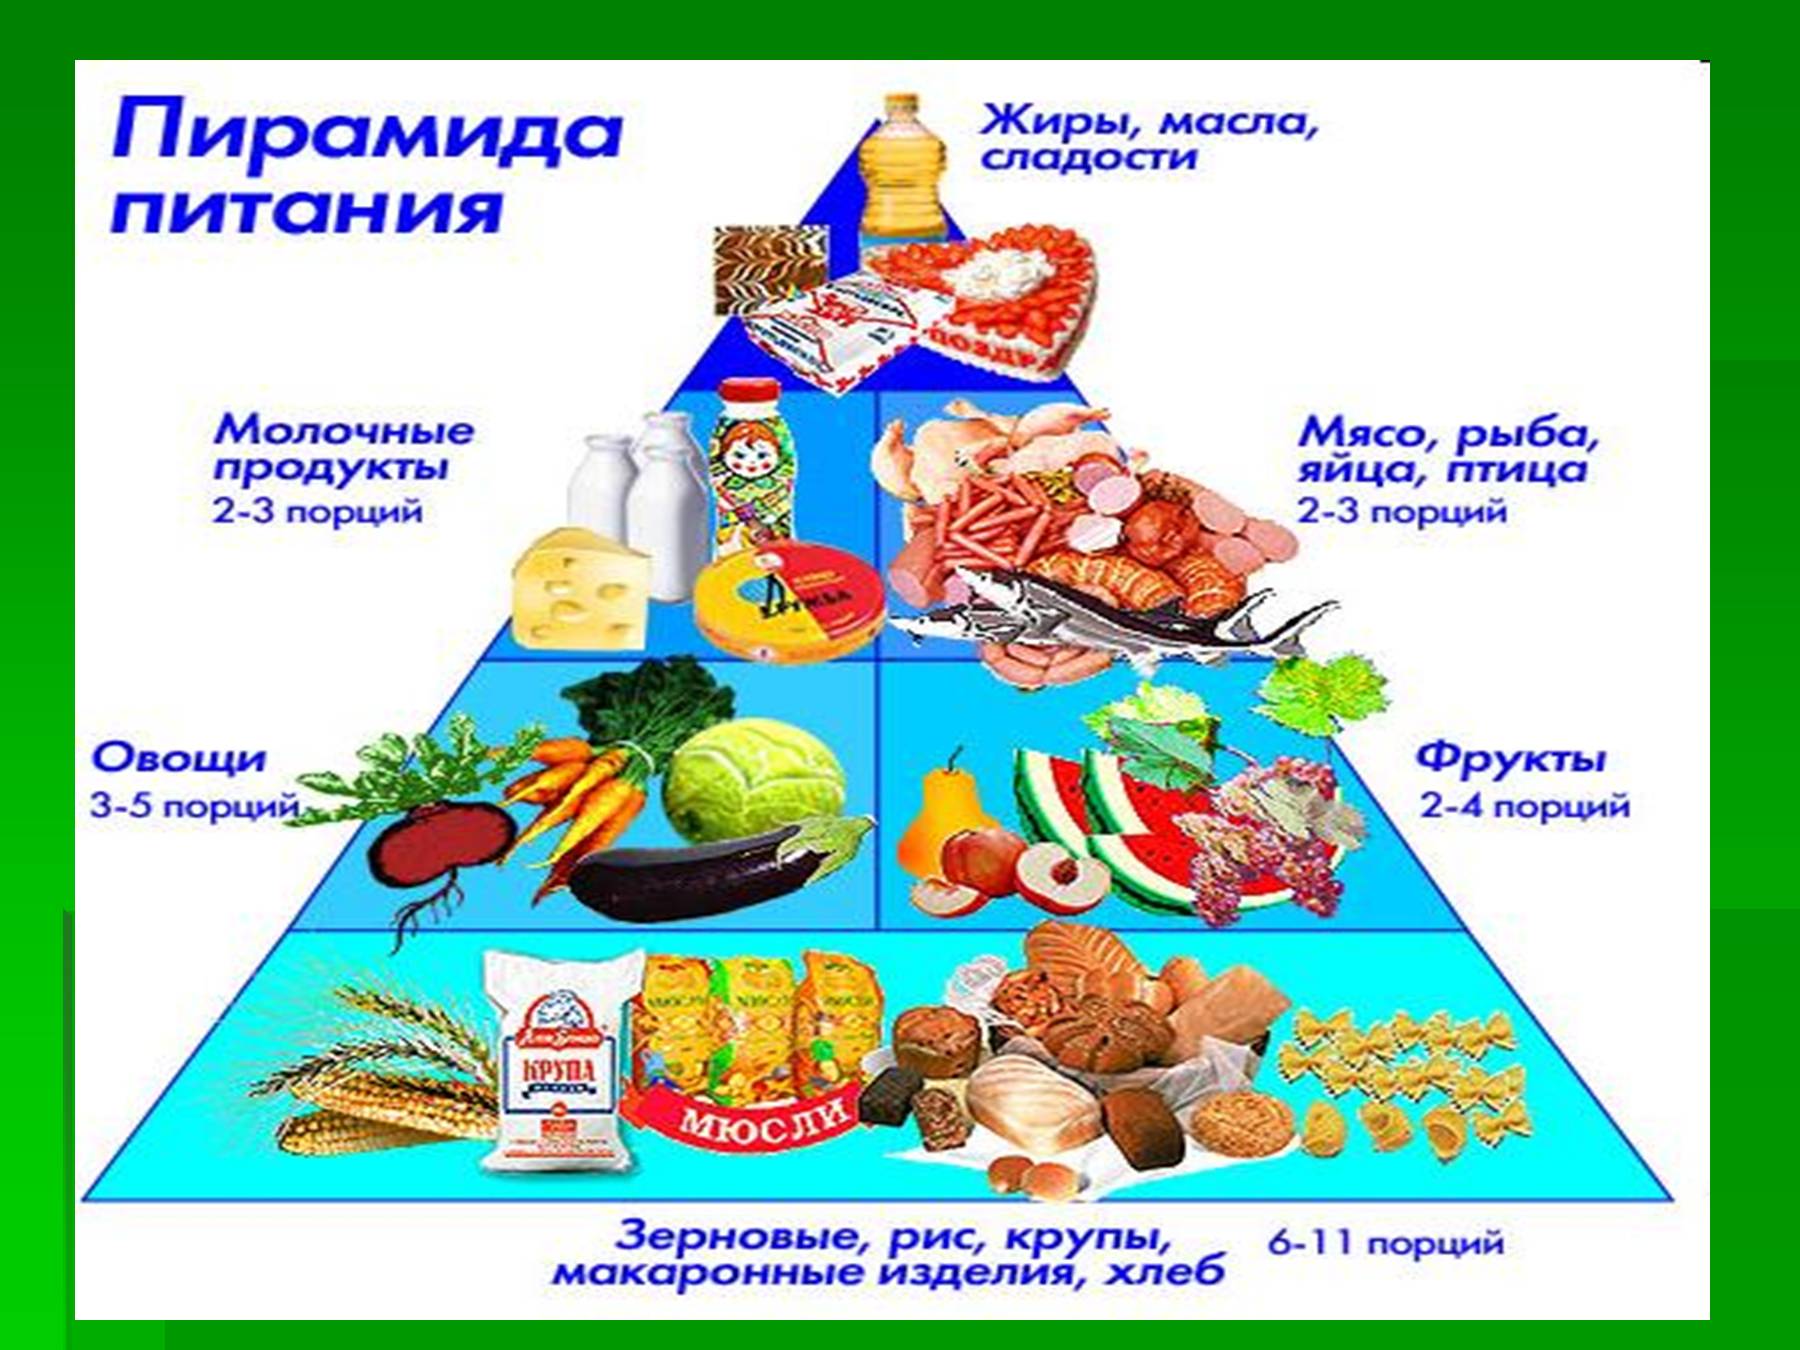 Питание три возраста. Пирамида питания. Пирамида правильного питания. Проект здоровое питание. Здоровое рациональное питание.